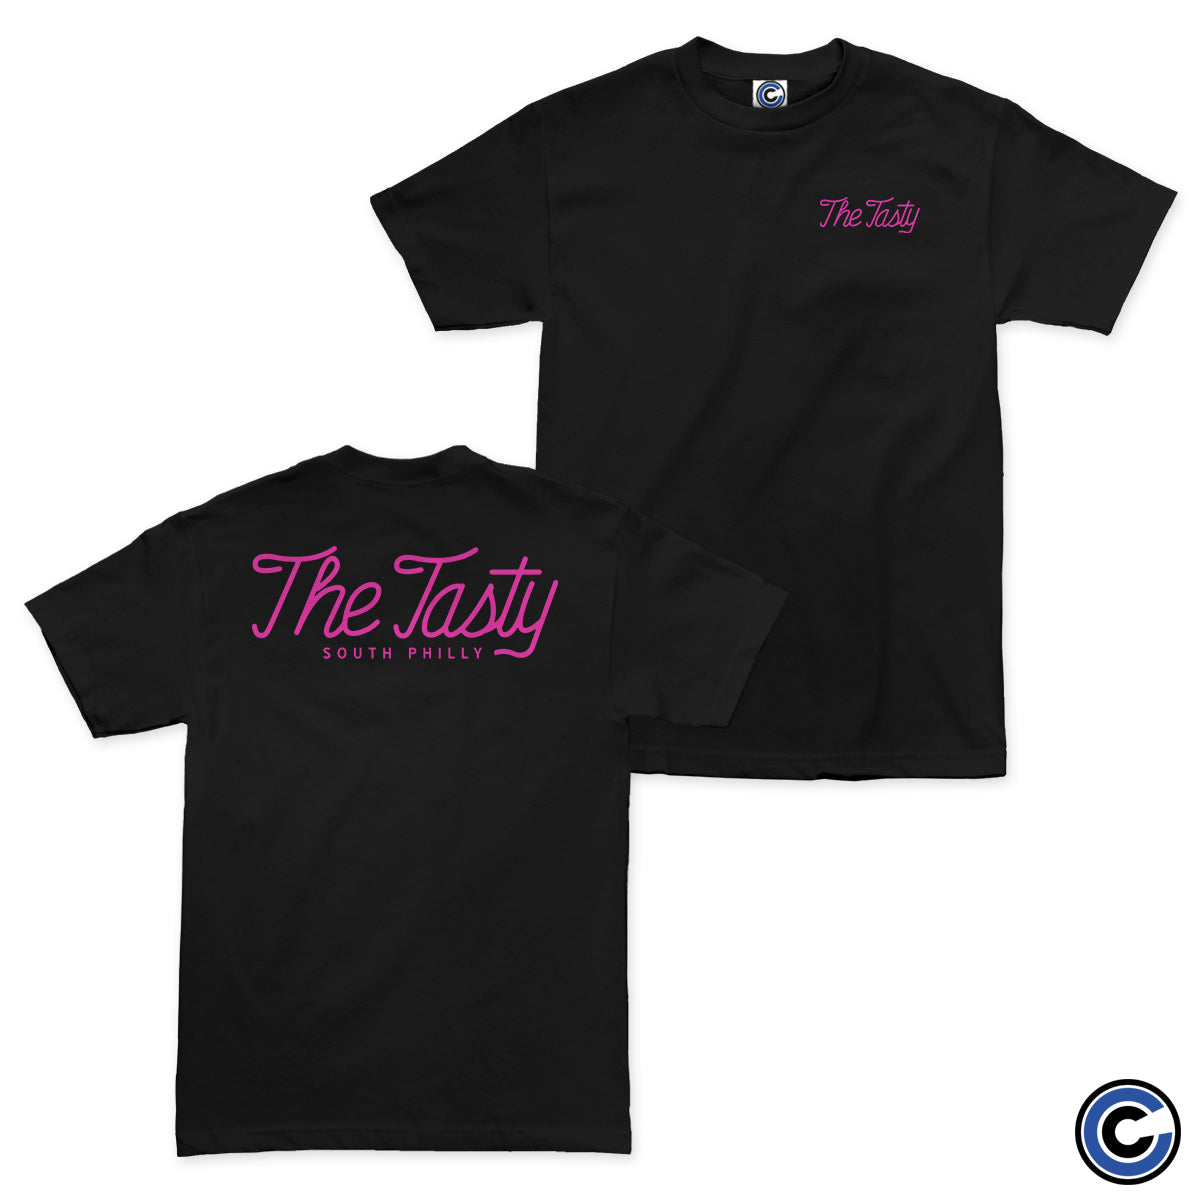 The Tasty "Neon" Shirt